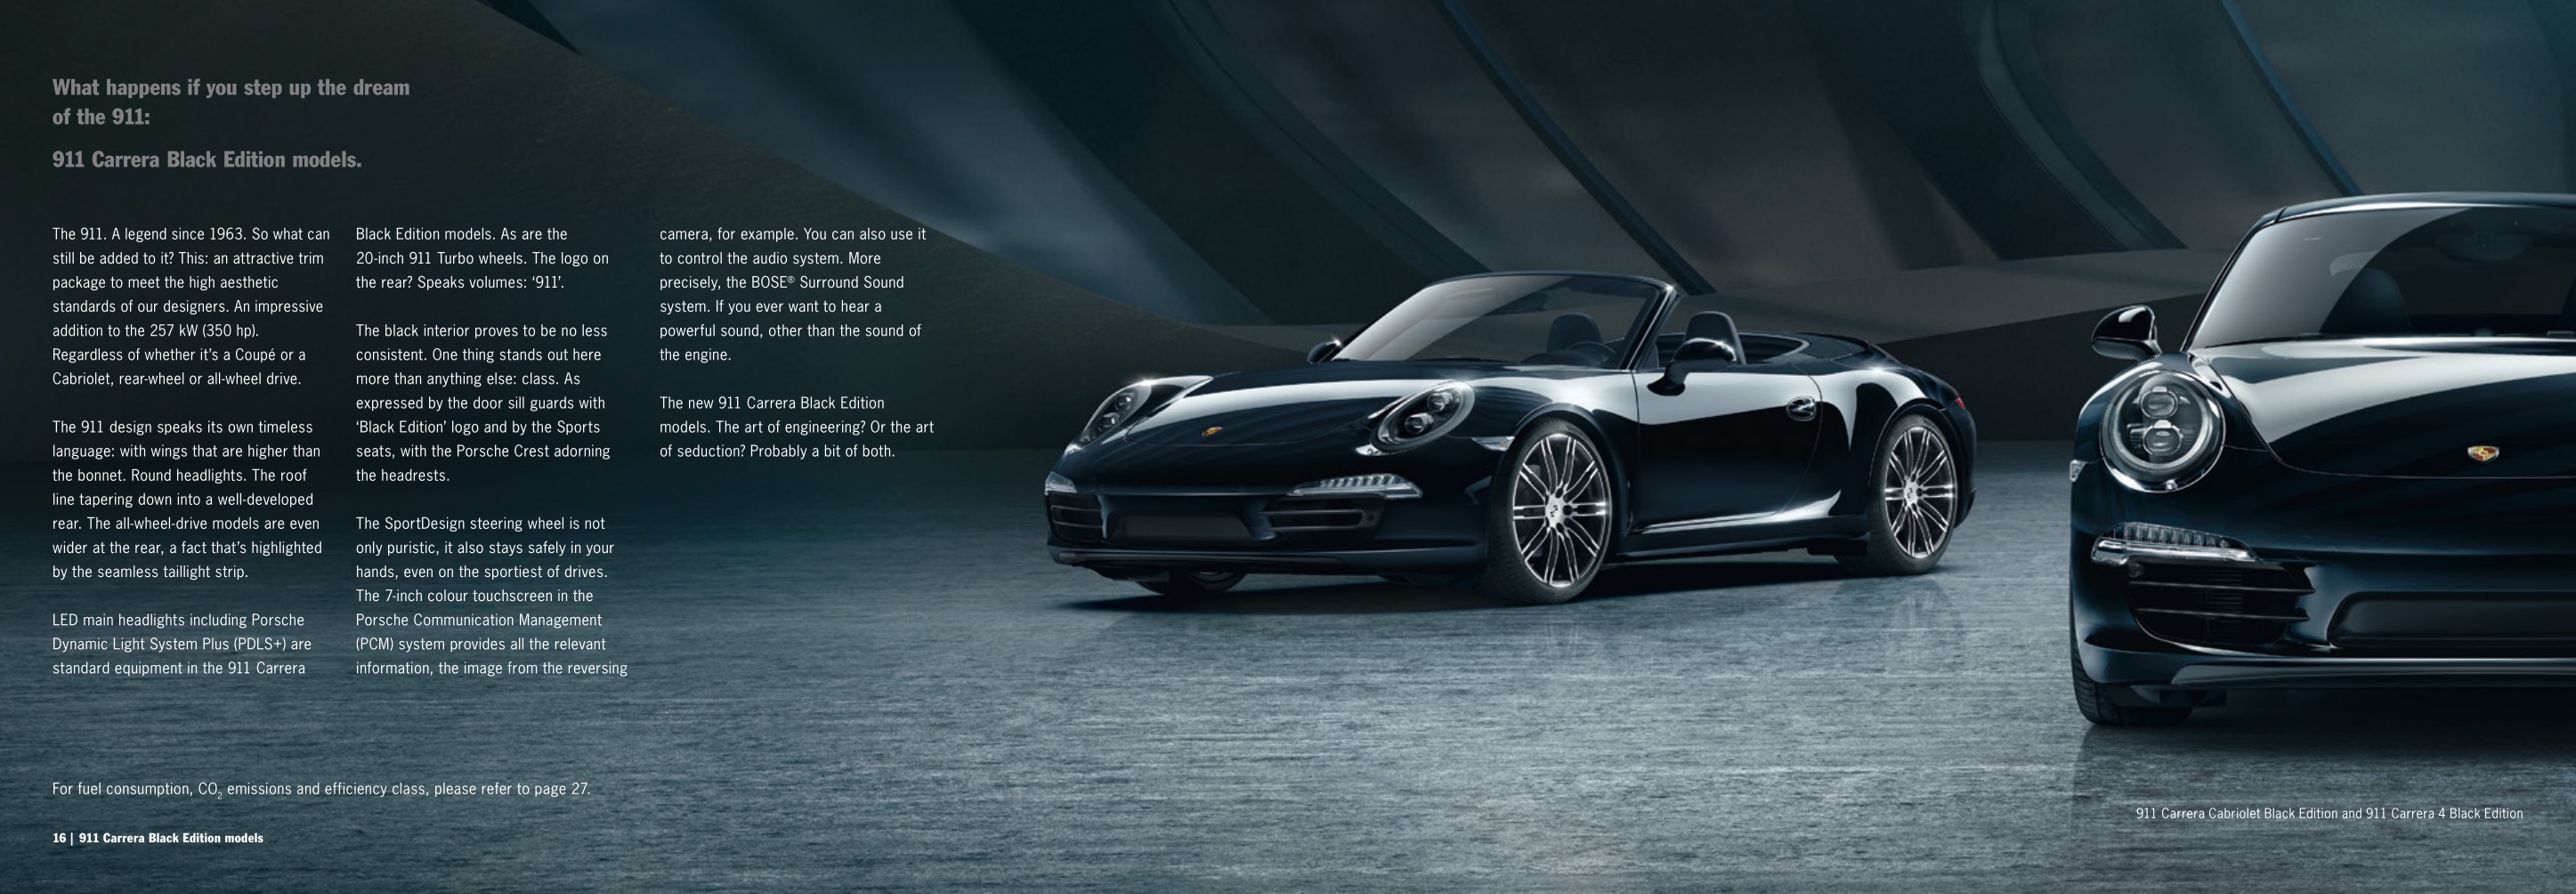 2015 Porsche Black Edition Brochure Page 3